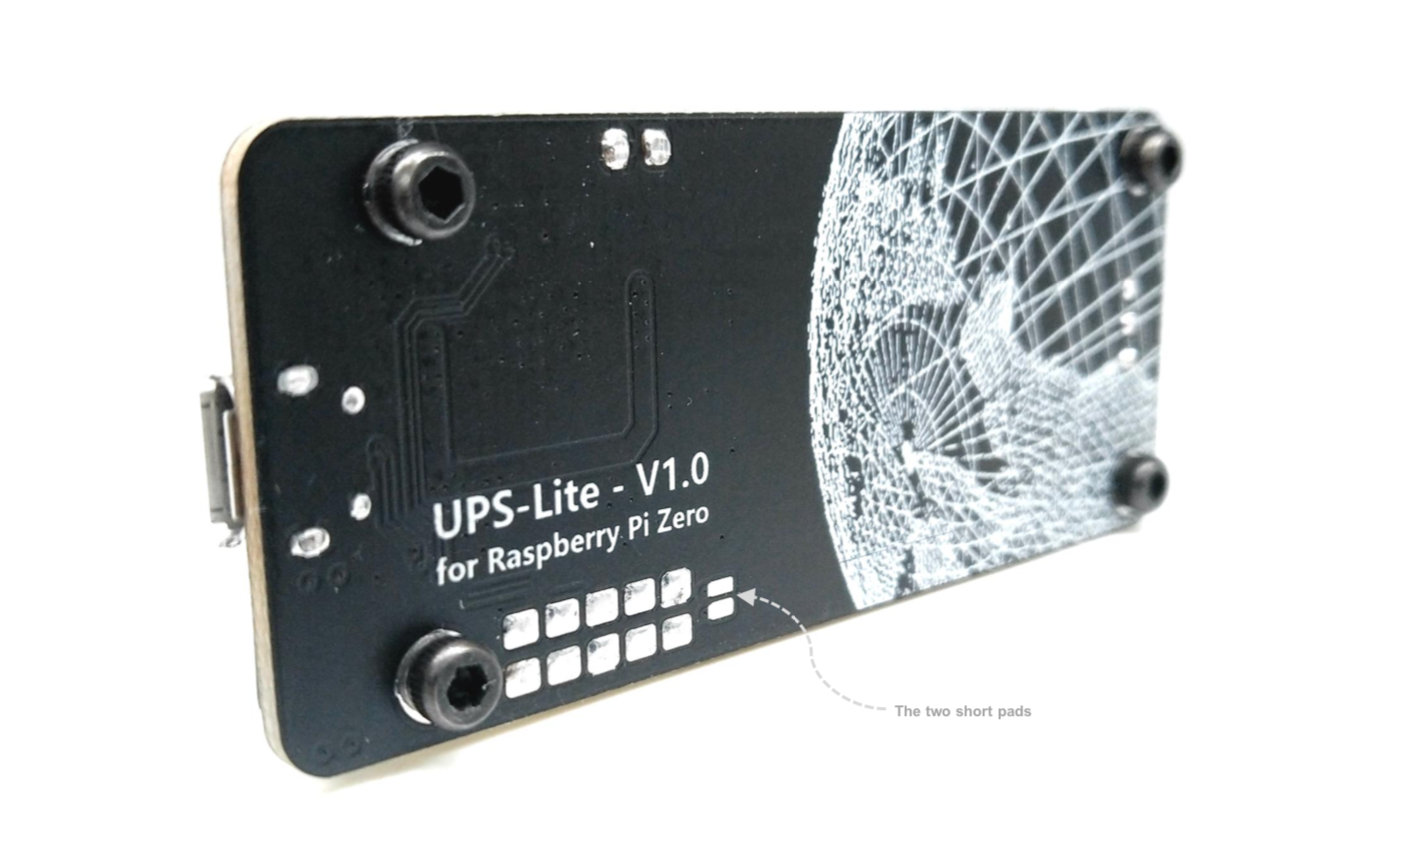 UPS-Lite solder pads